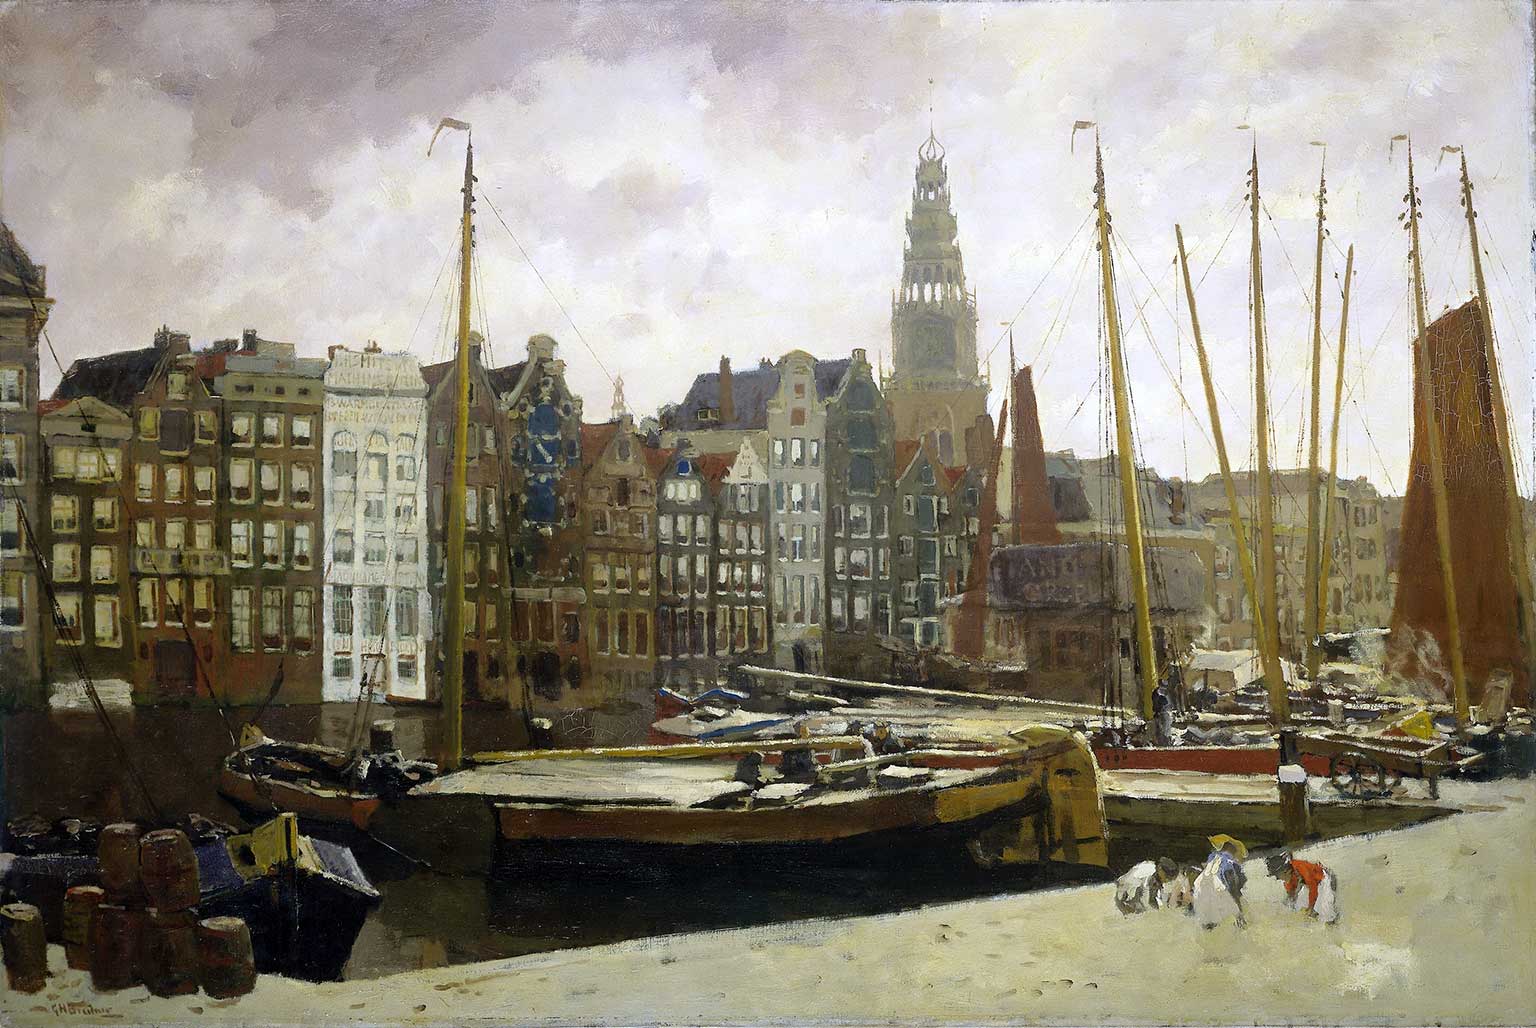 Damrak, Amsterdam, by George Hendrik Breitner, 1903